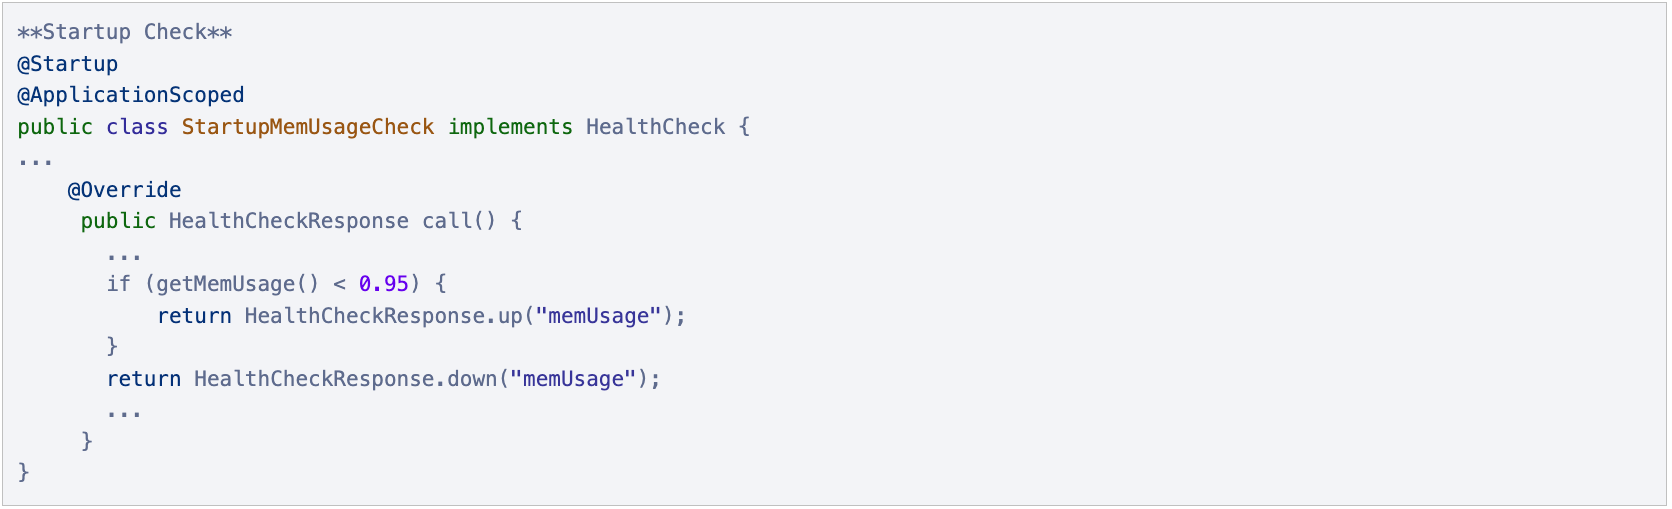 Screenshot of example Startup Check code